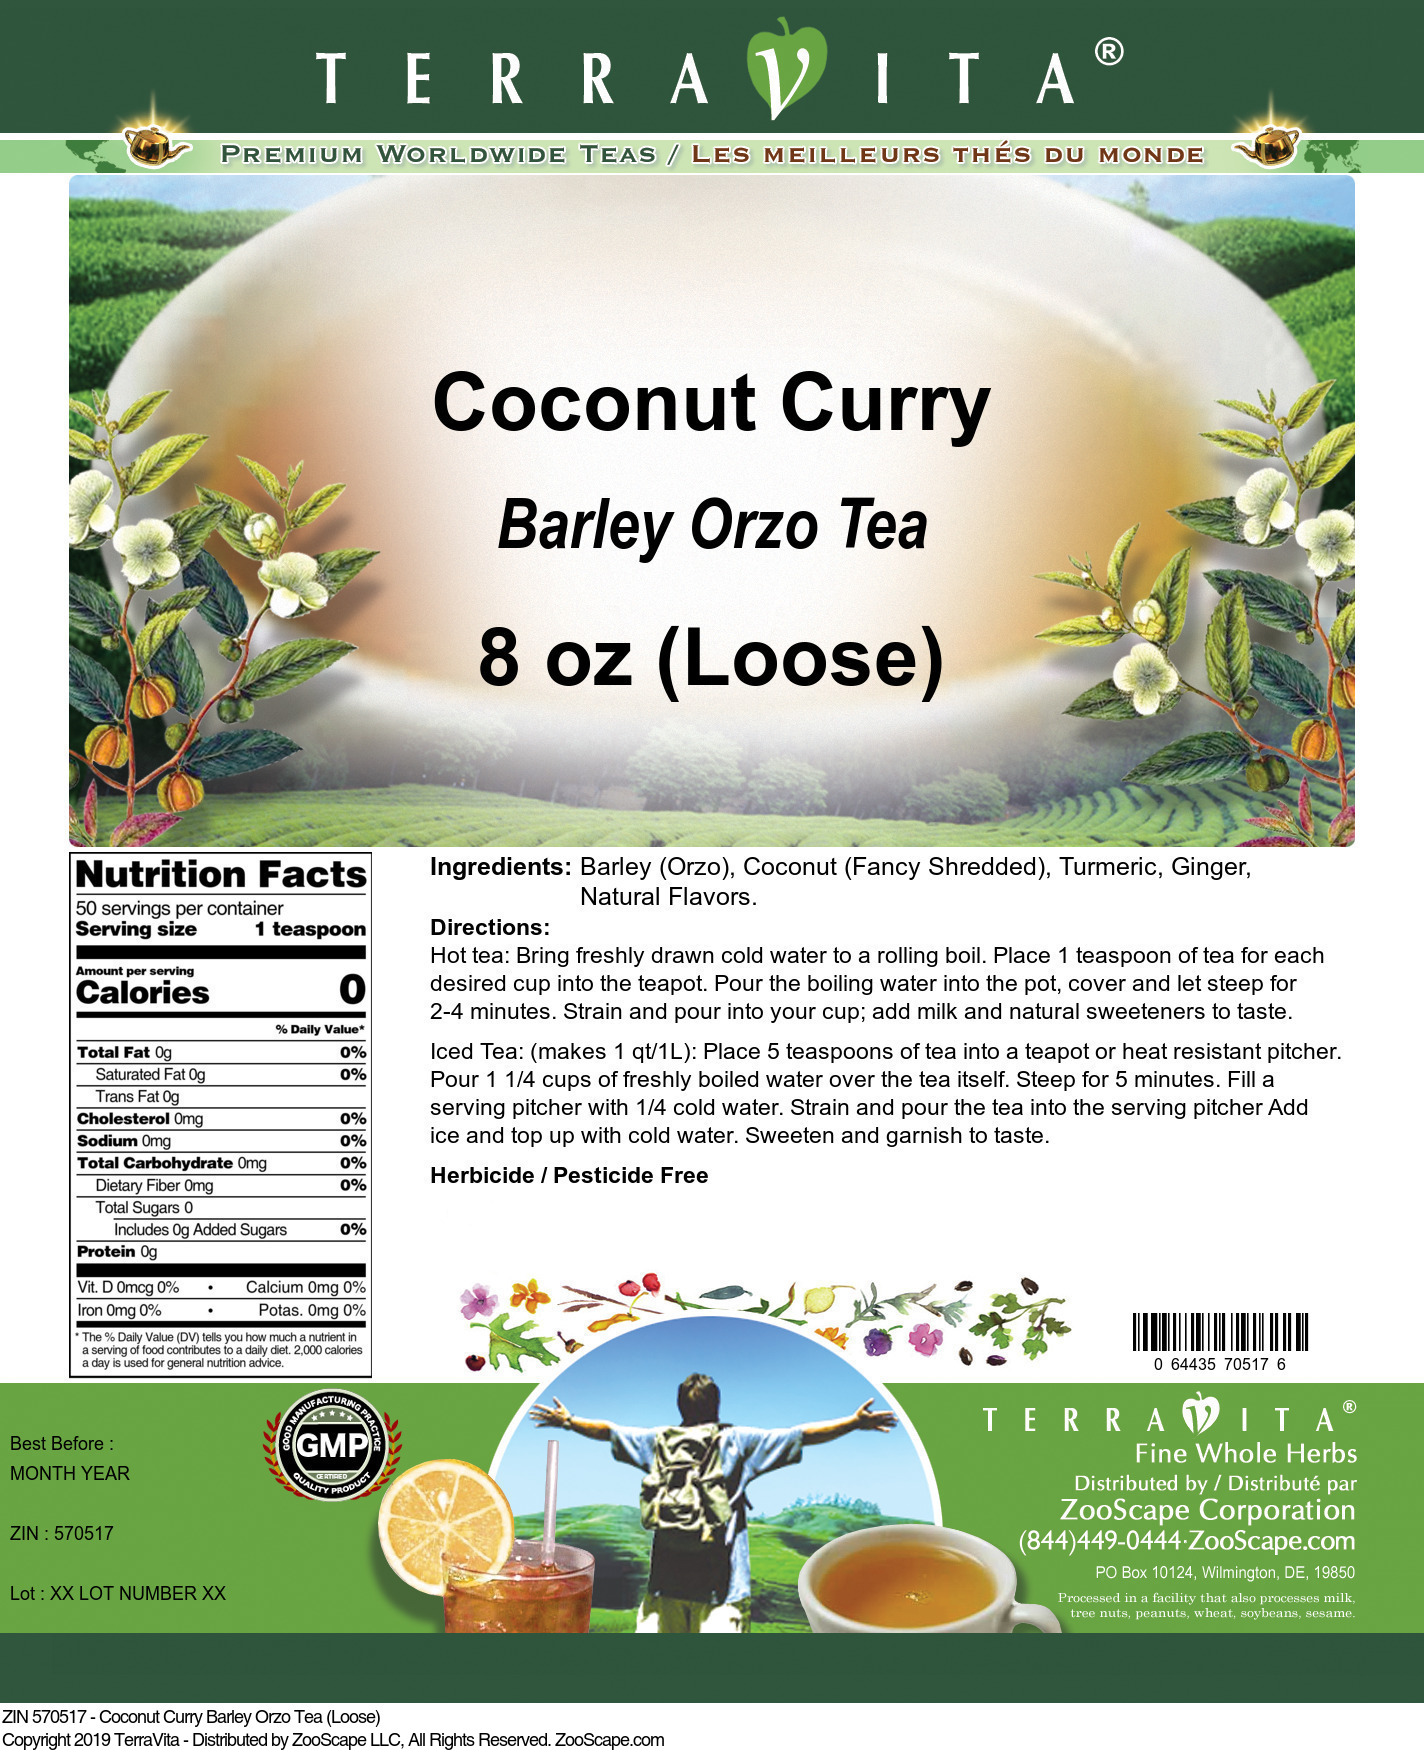 Coconut Curry Barley Orzo Tea (Loose) - Label